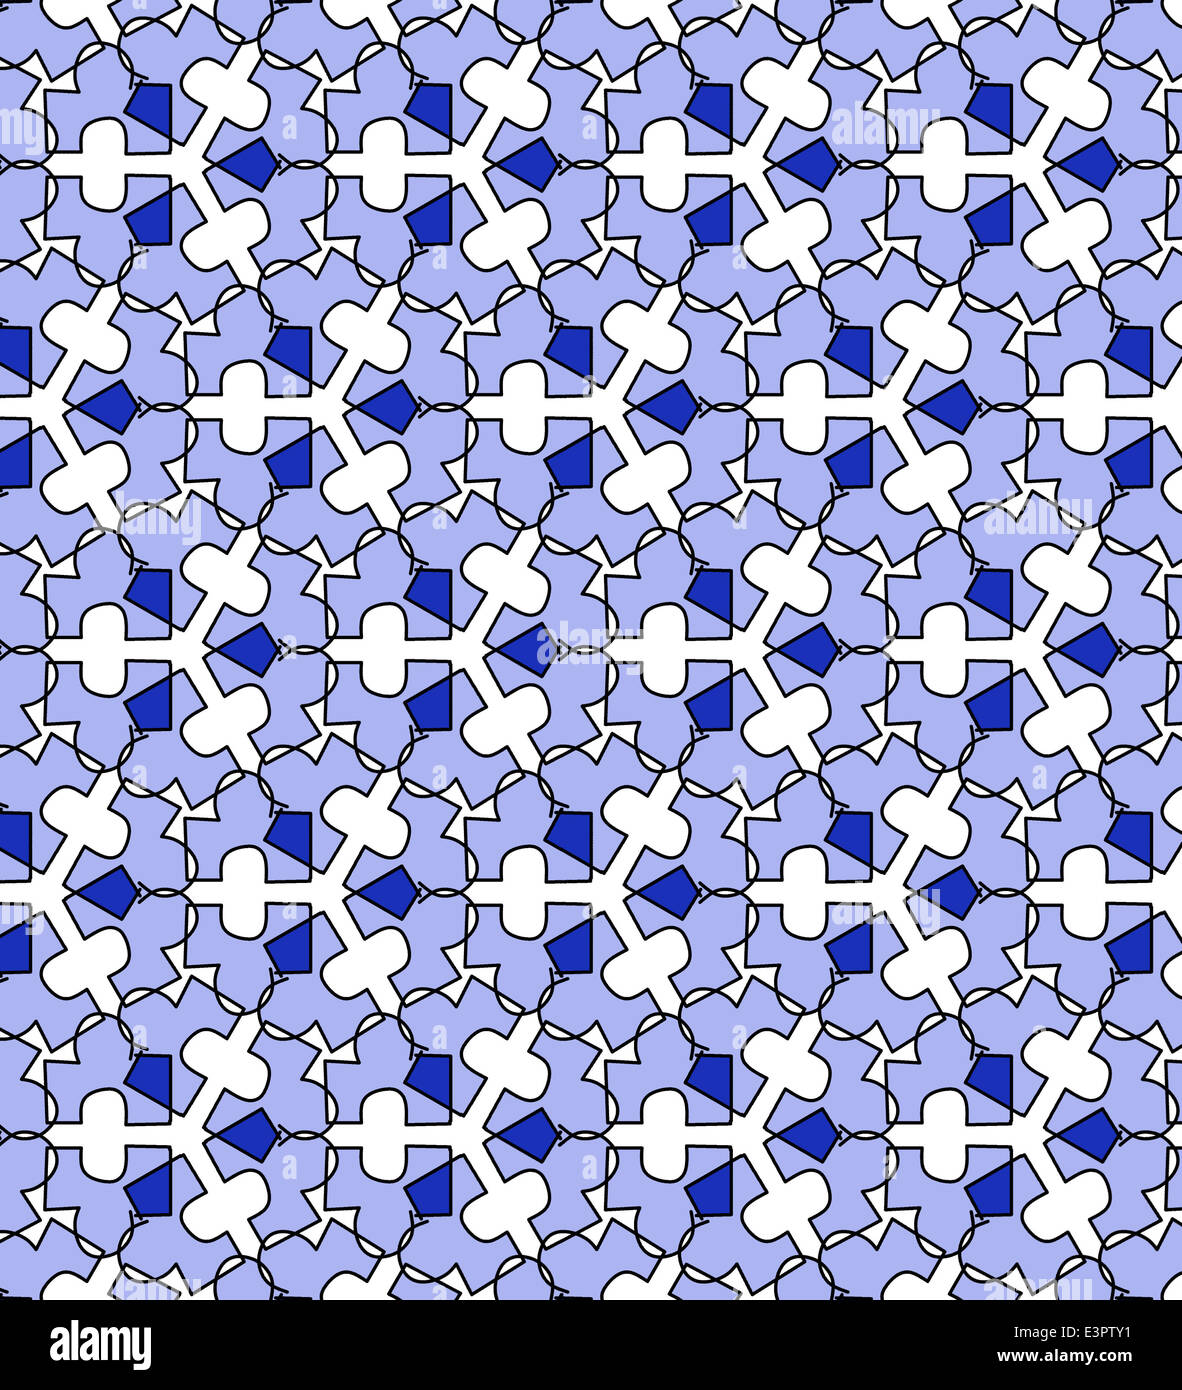 Illustration of symmetrical jigsaw piece patterned wallpaper Stock Photo